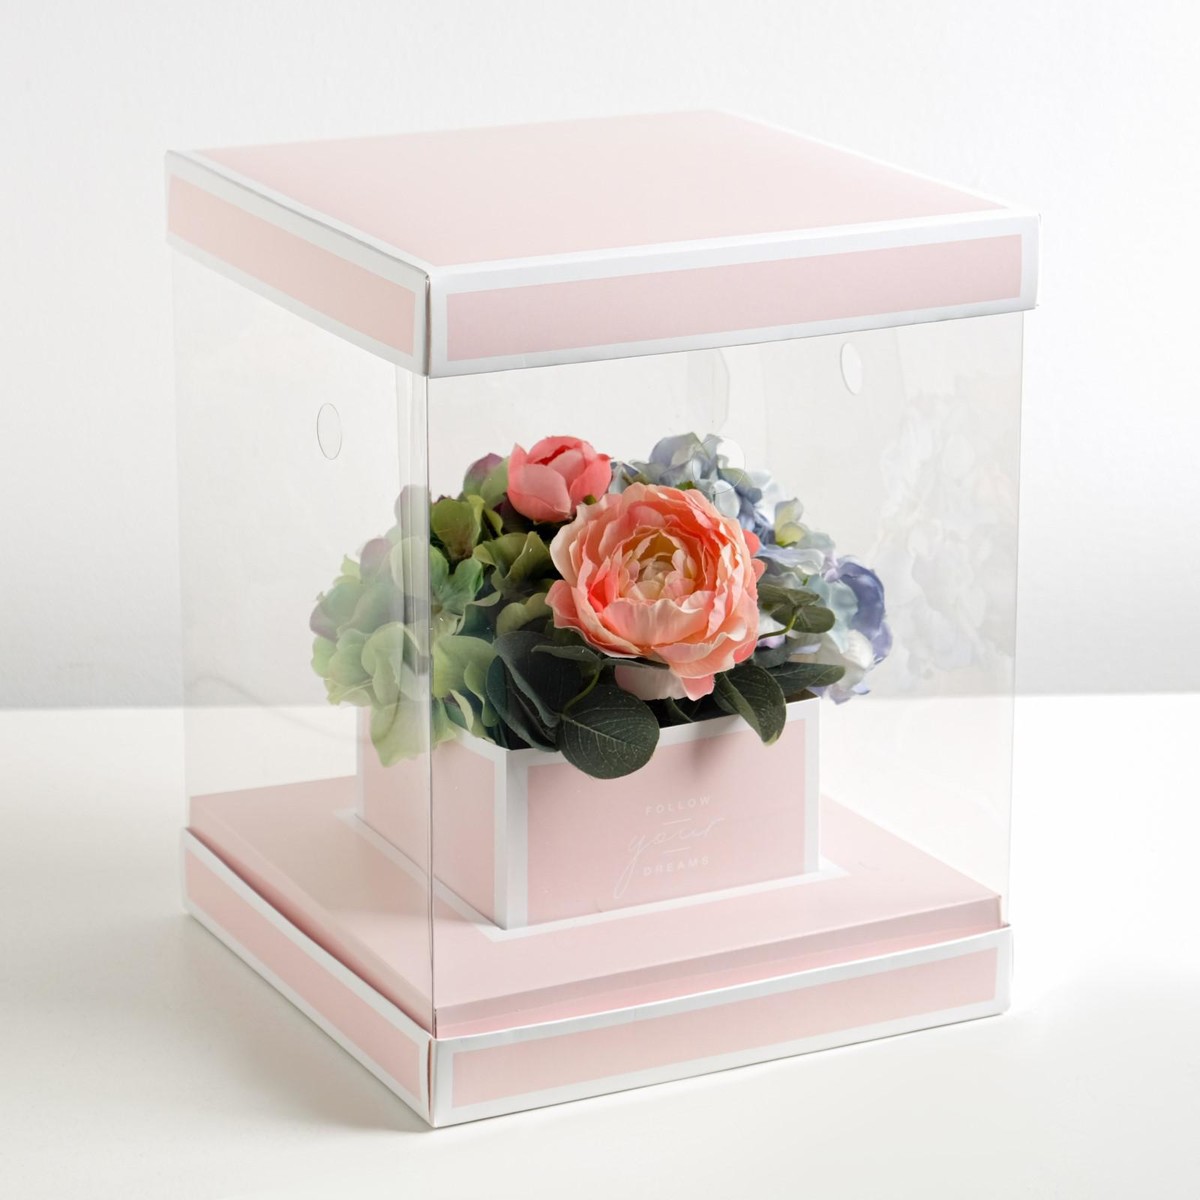 Коробка подарочная для цветов с вазой и pvc окнами складная, упаковка, follow your dreams, 23 х 30 х 23 см all your perfects